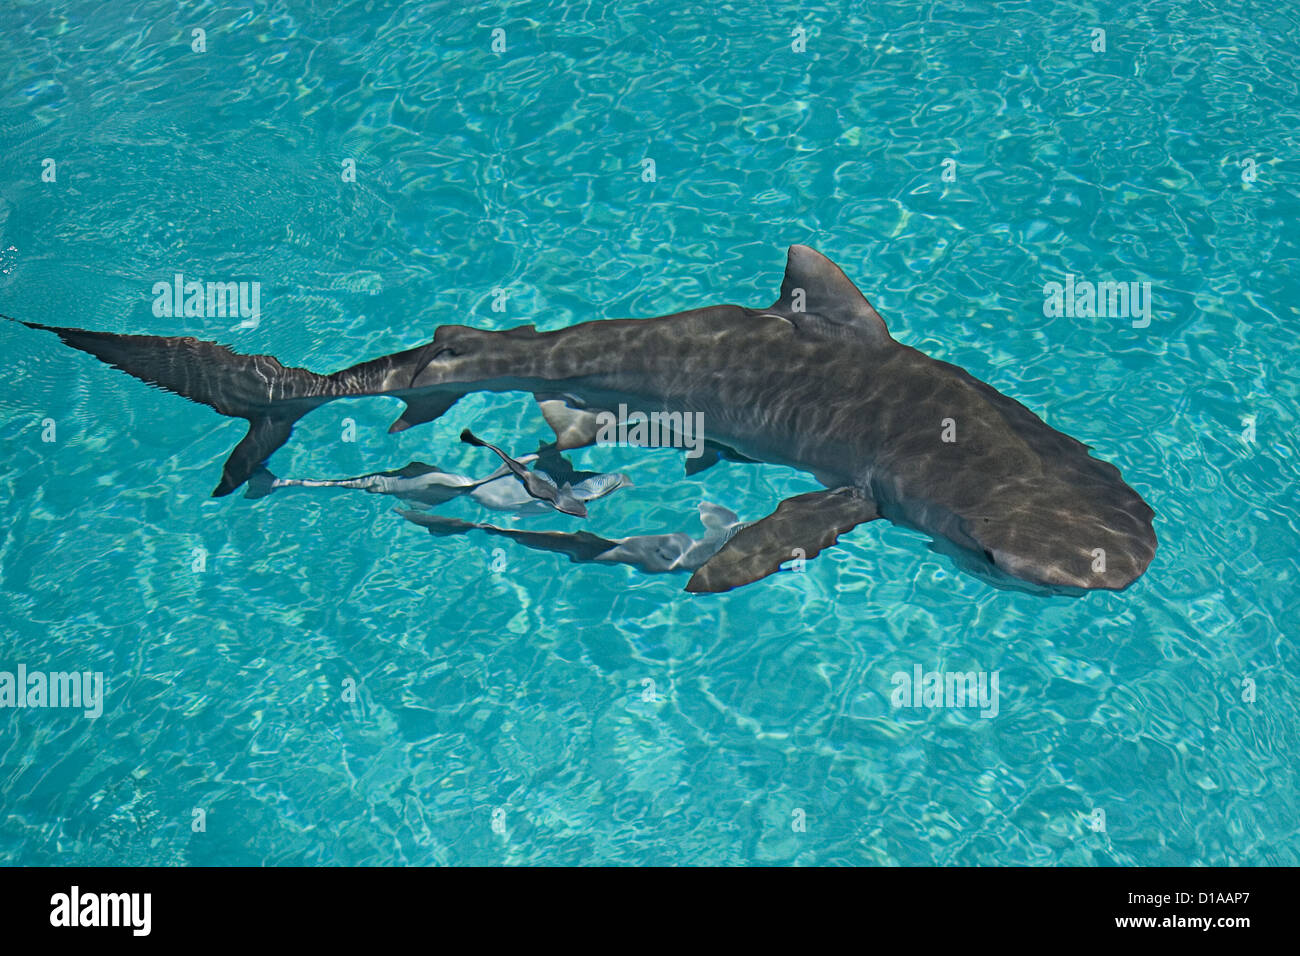 Caribbean, Bahamas, Little Bahama Bank, 14 Foot Tiger Shark [Galeocerdo Cuvier], View From Above Water. Stock Photo